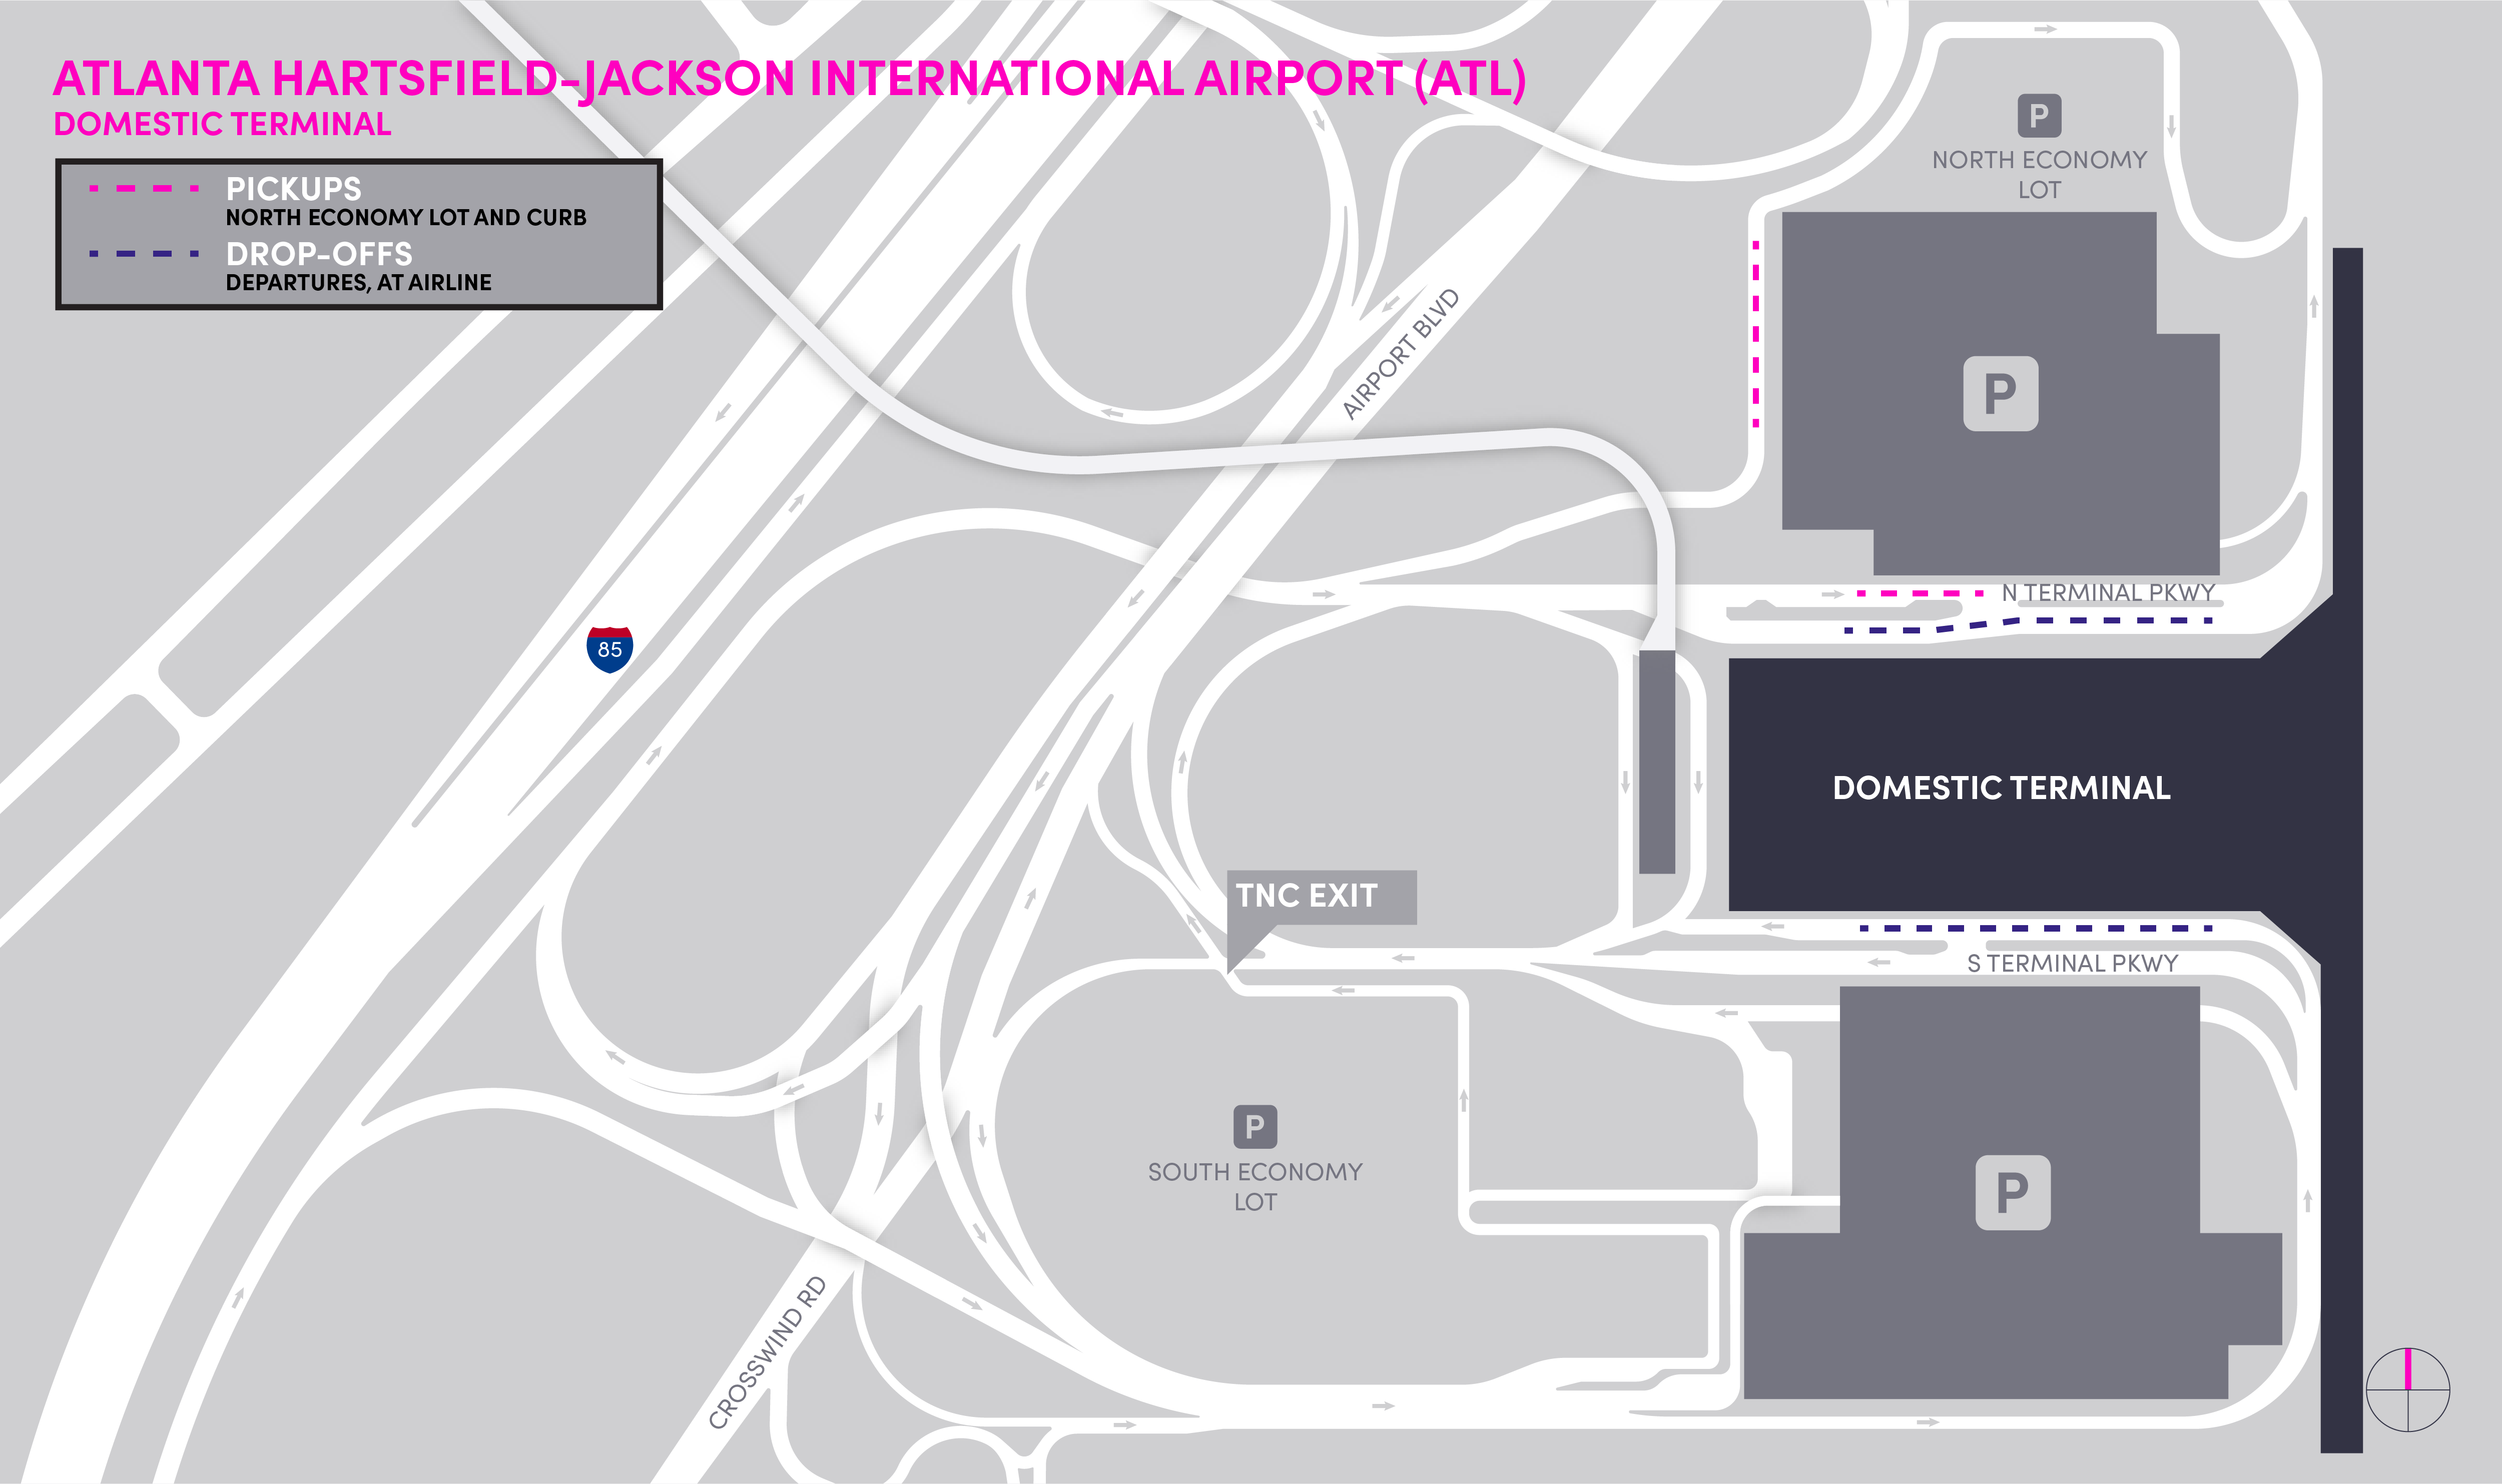 Map of the Atlanta Hartsfield-Jackson International Airport (ATL) detailing pickup and dropoff locations.